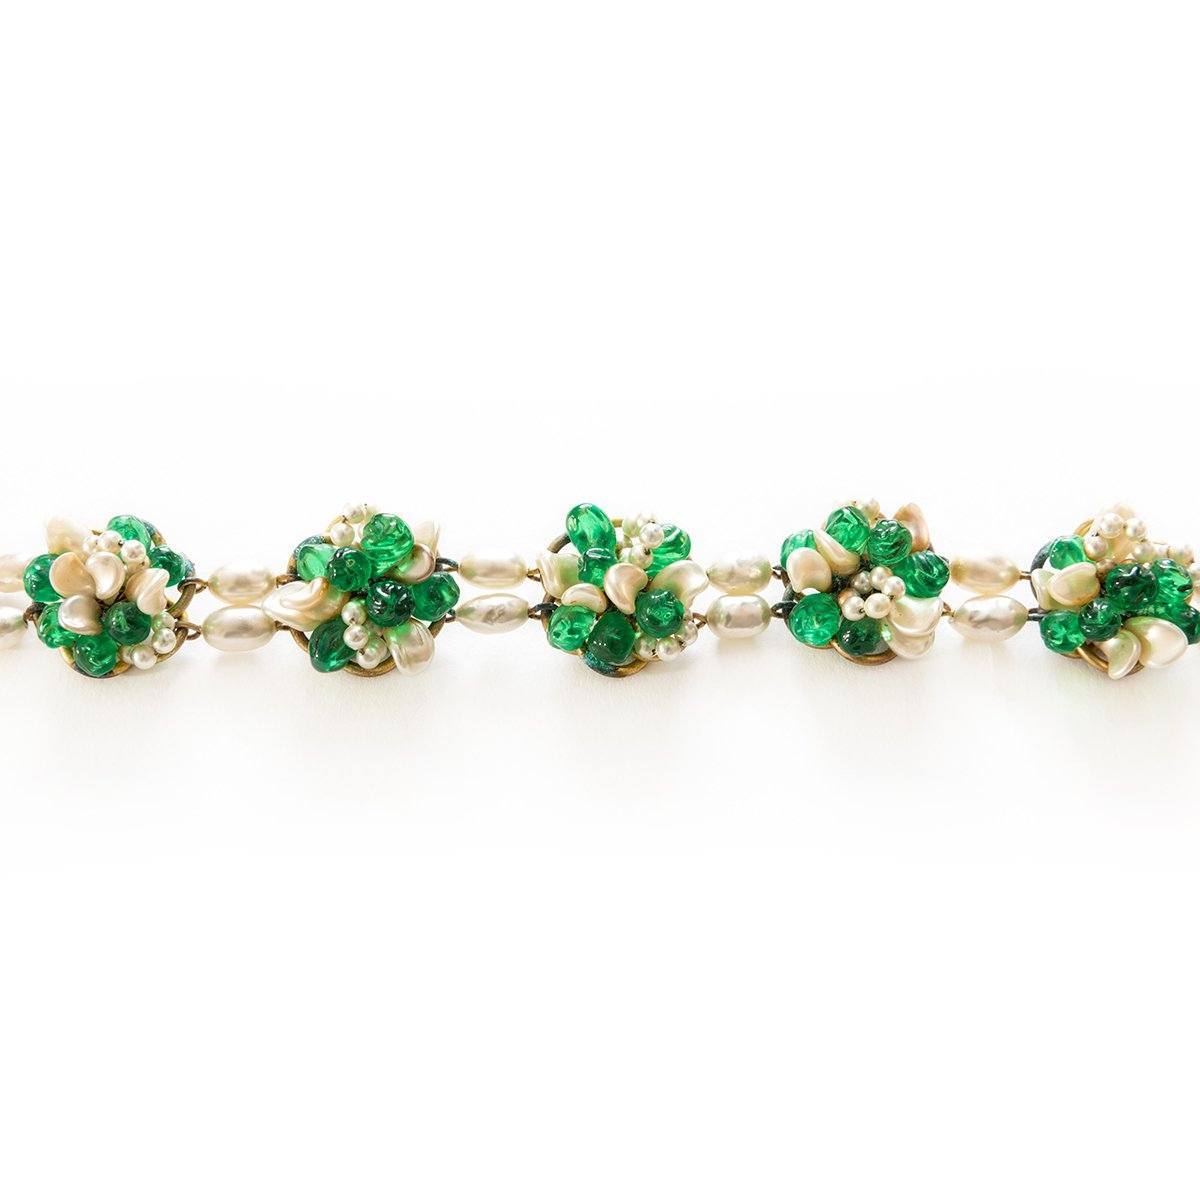 1950s Signed Louis Rousselet Freshwater Pearls & Green Glass Bracelet